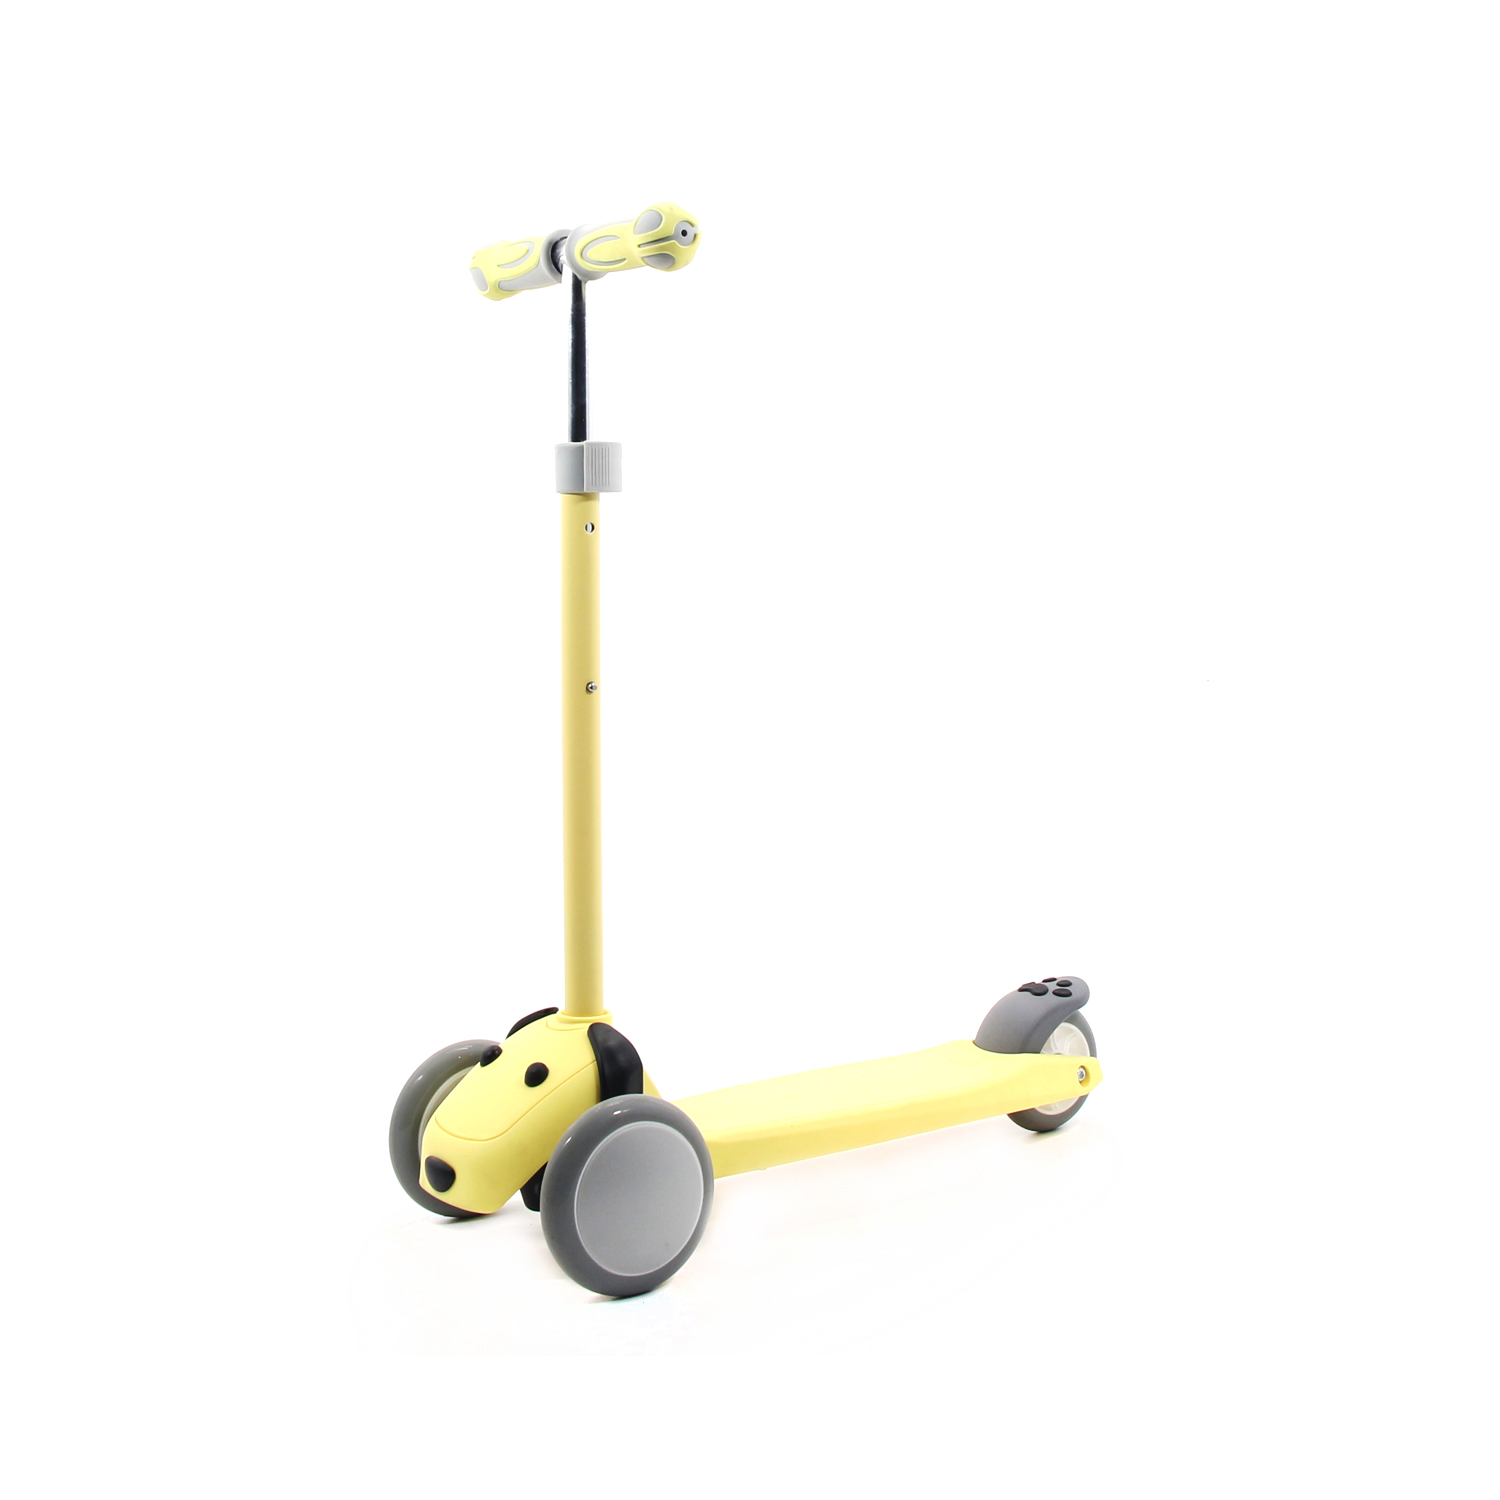 Scooter de patadas para niños pequeños con 3 ruedas de iluminación fresca